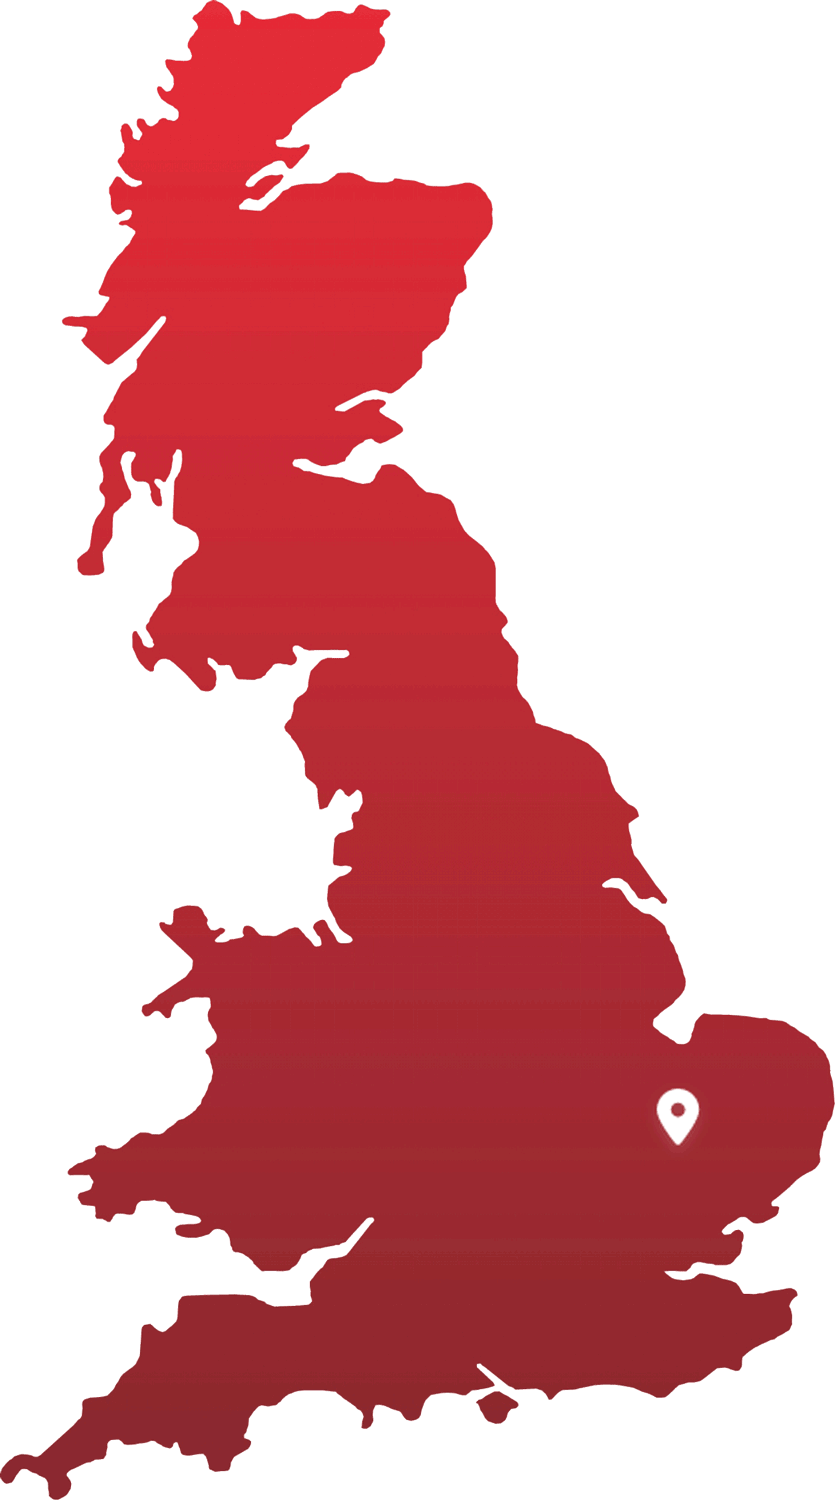 UK Map locations